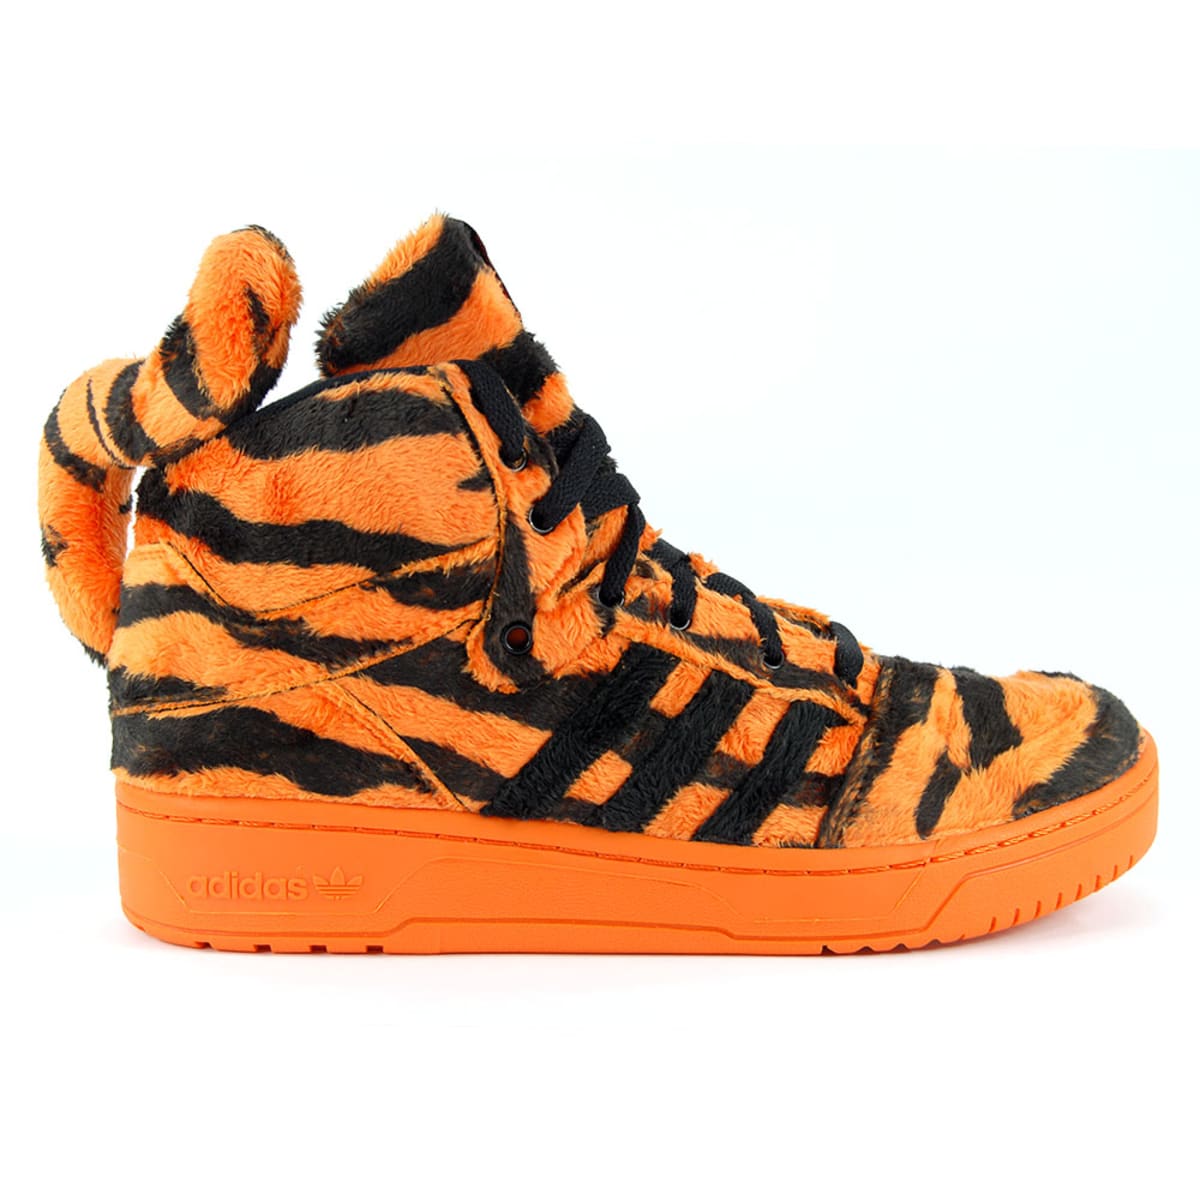 adidas JS Tiger, Sneaker News | gazelle bleu clair femme youtube | Launches, Collabs & Info | Adidas, Release Dates